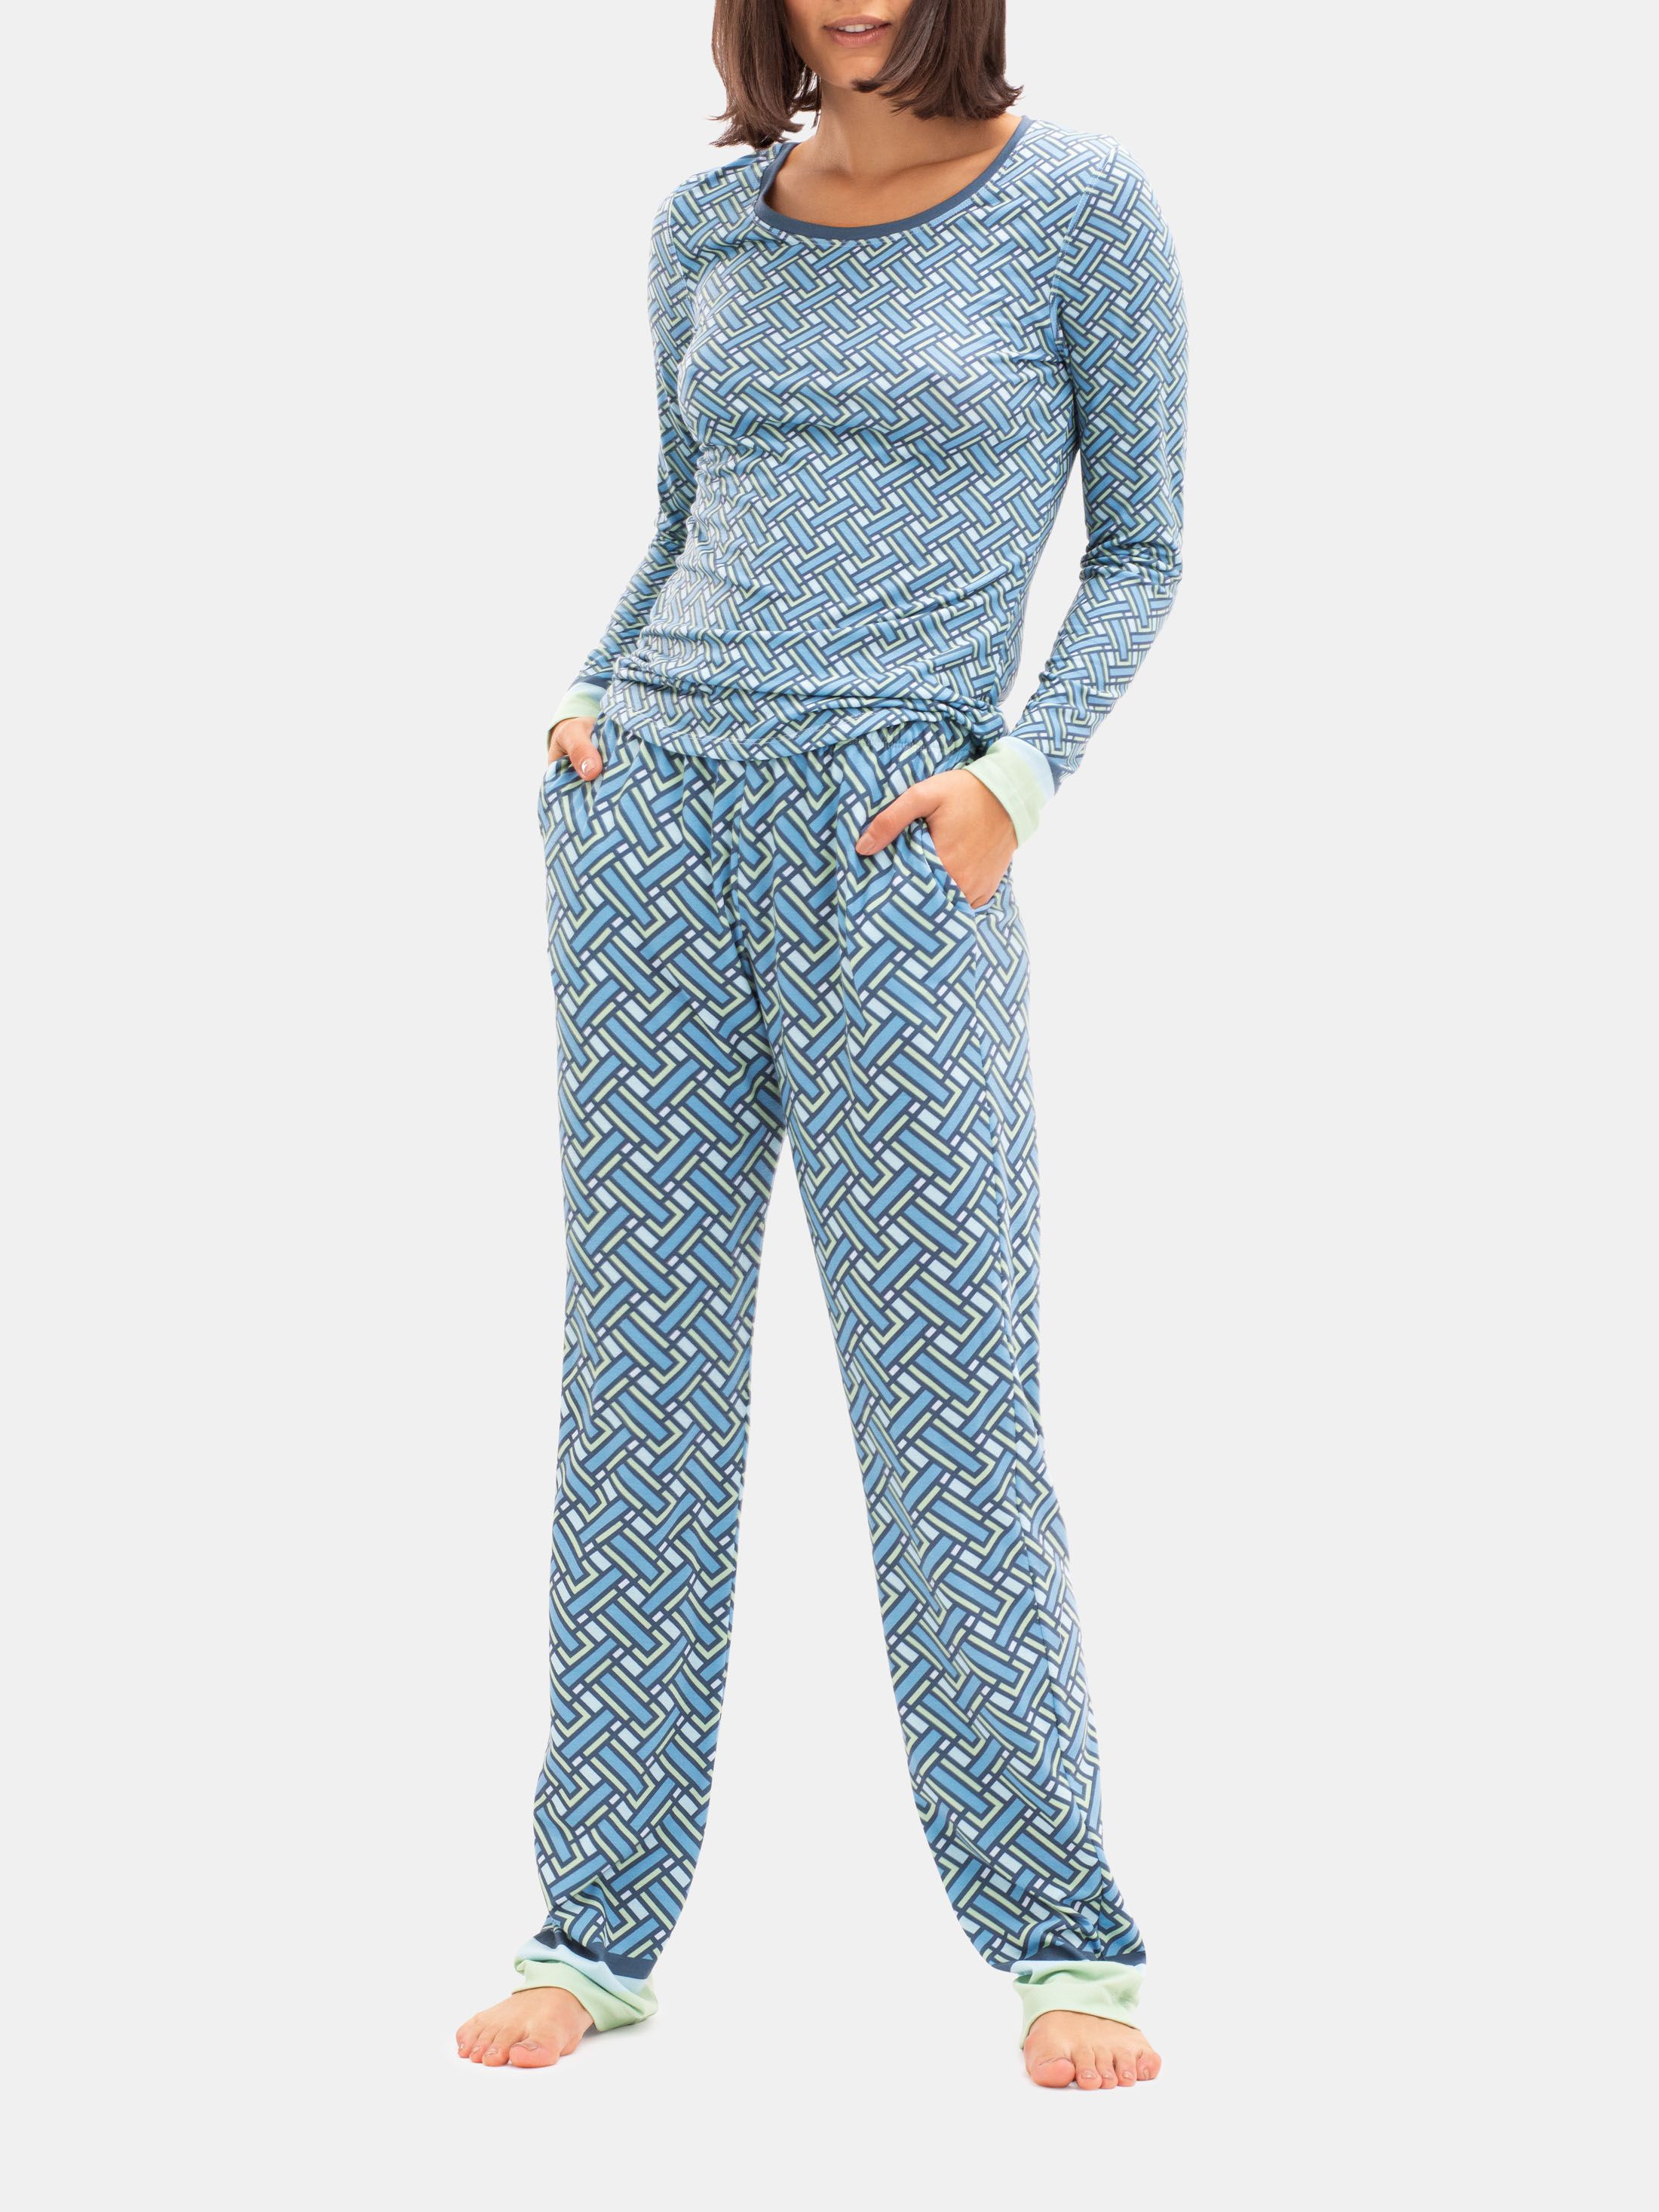 make your own pajamas